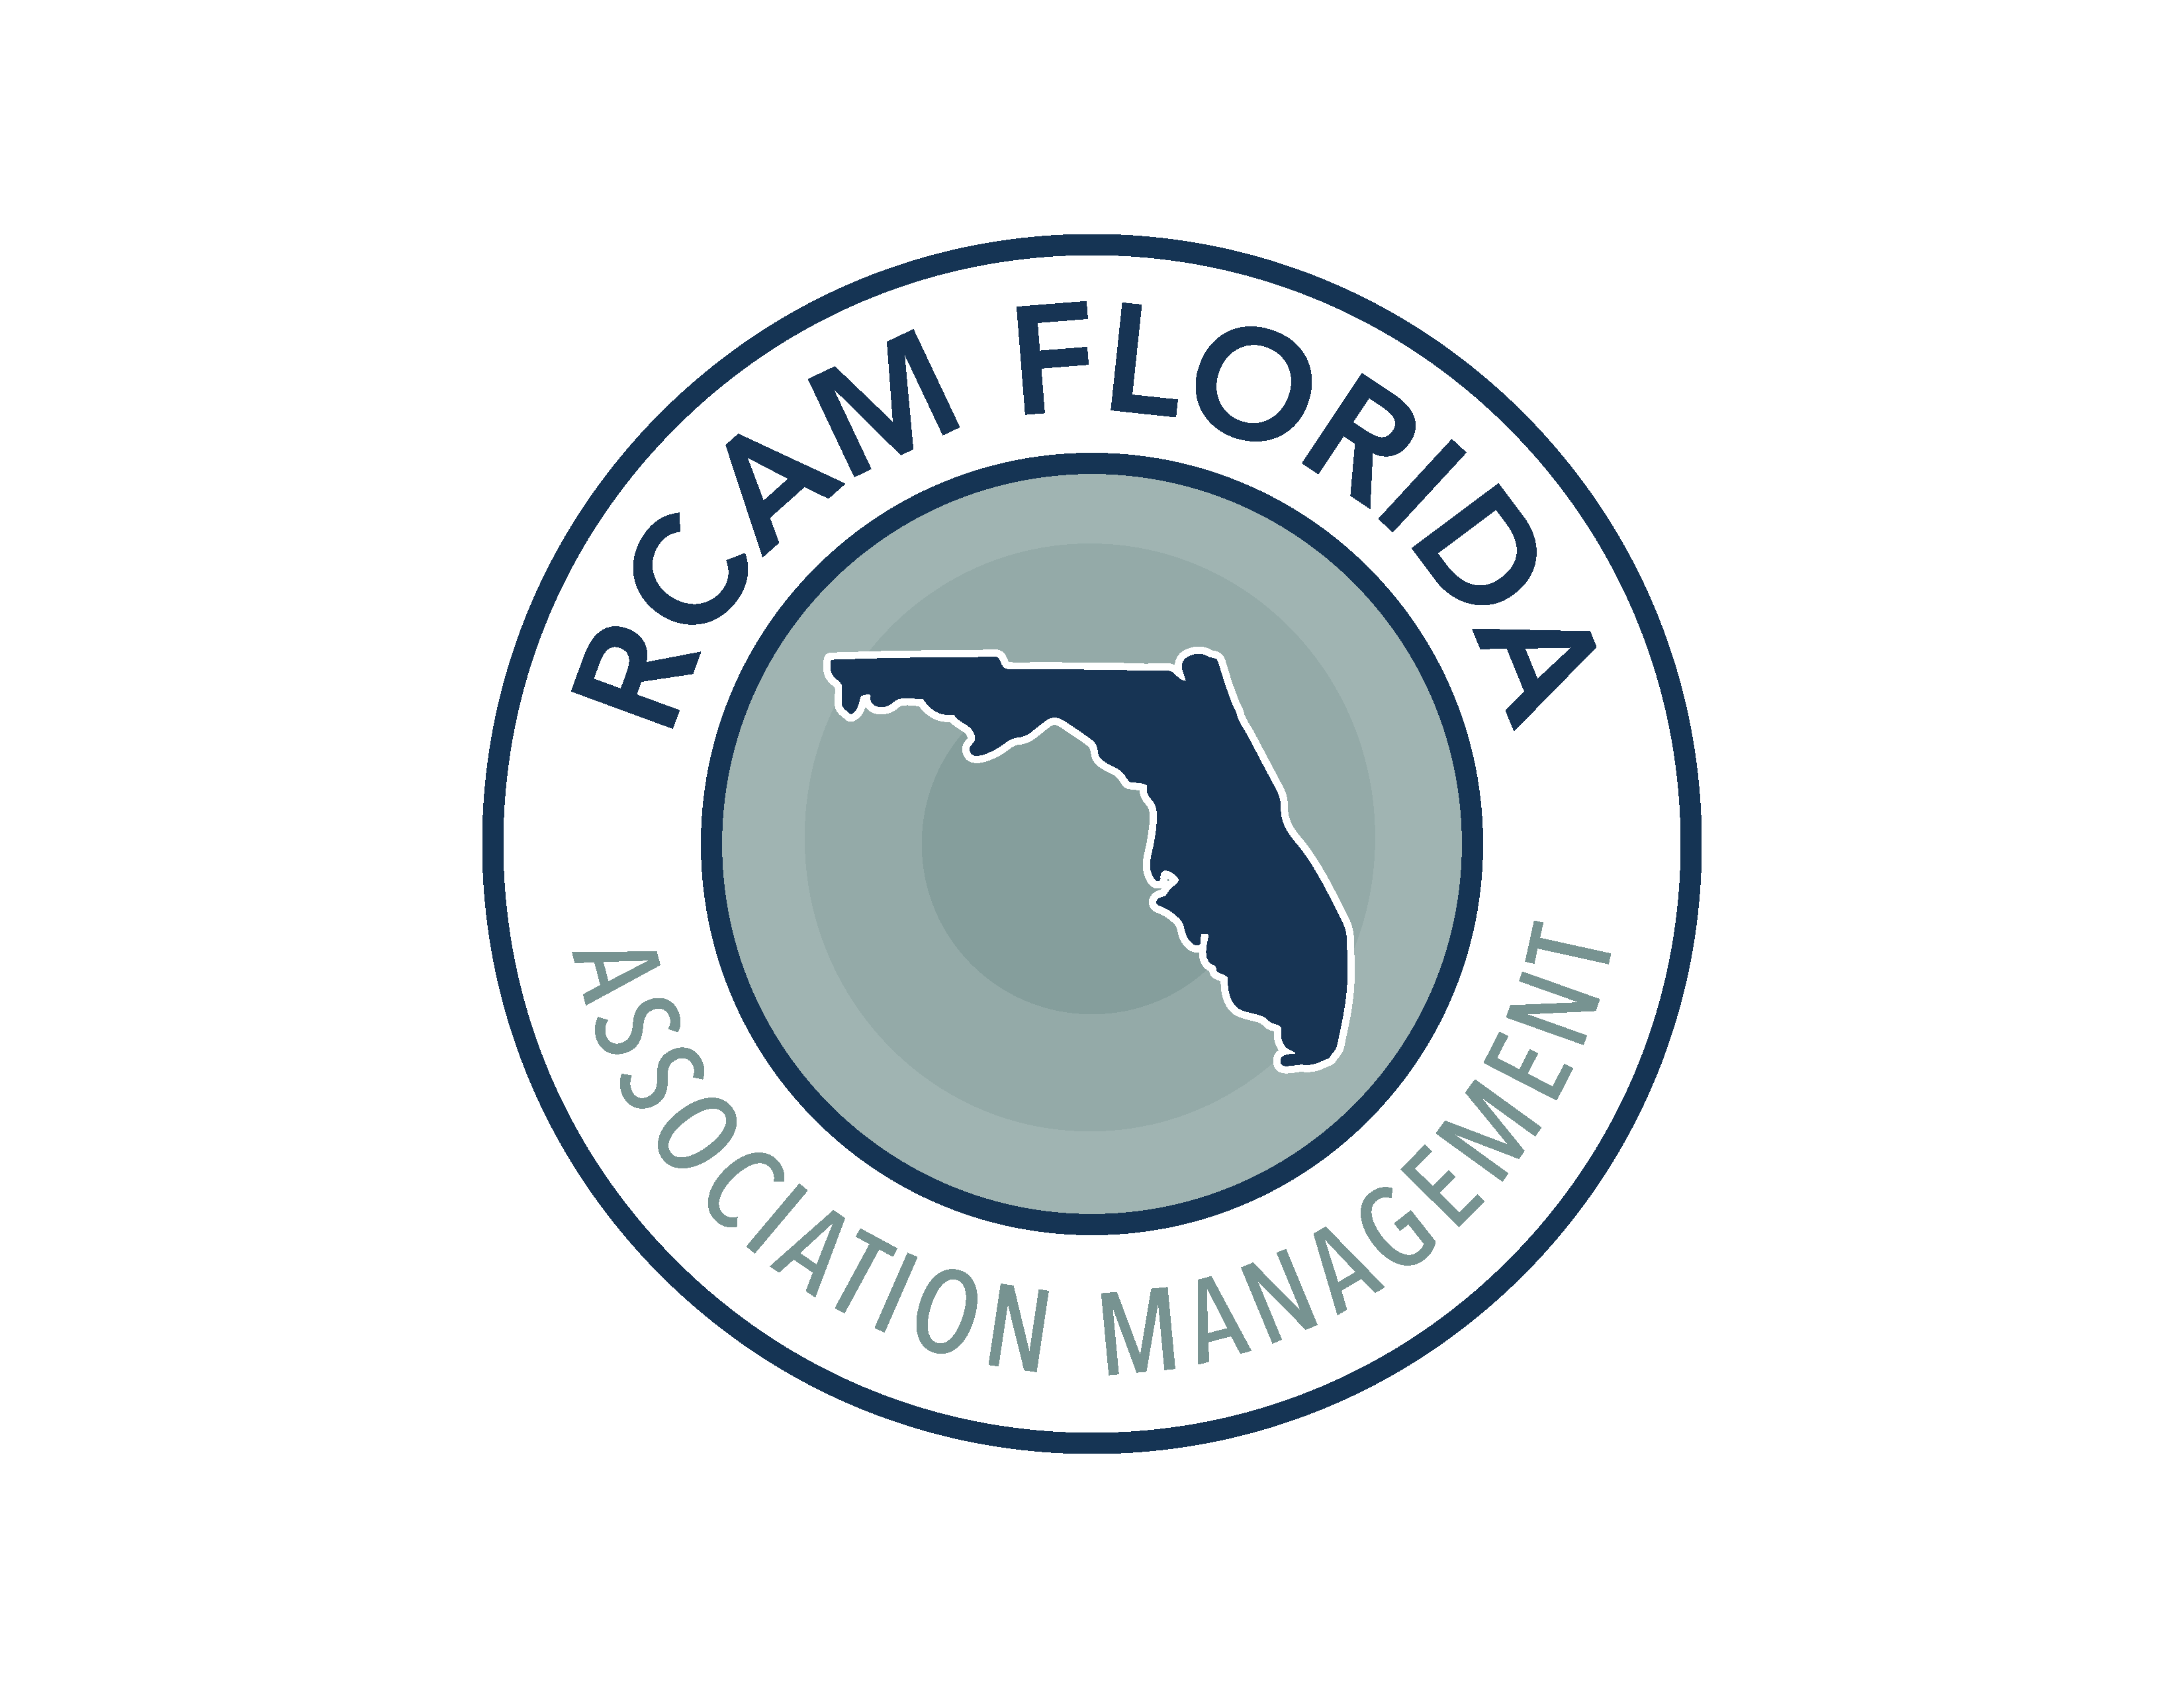 RCAM Florida Association Management